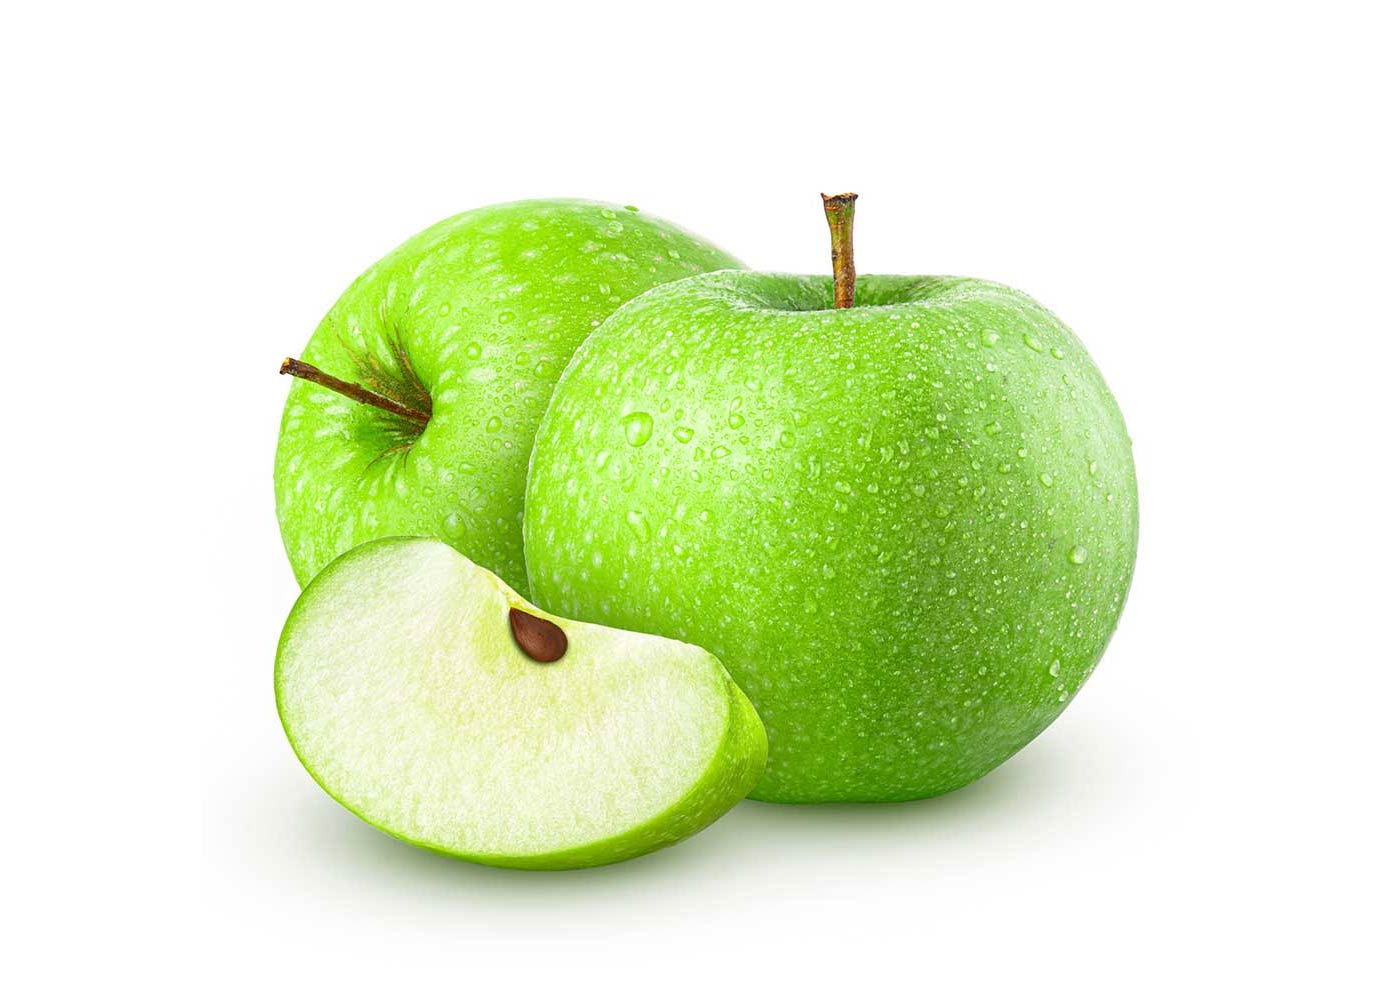 5 Uses of Apple Fruit | Health Benefits